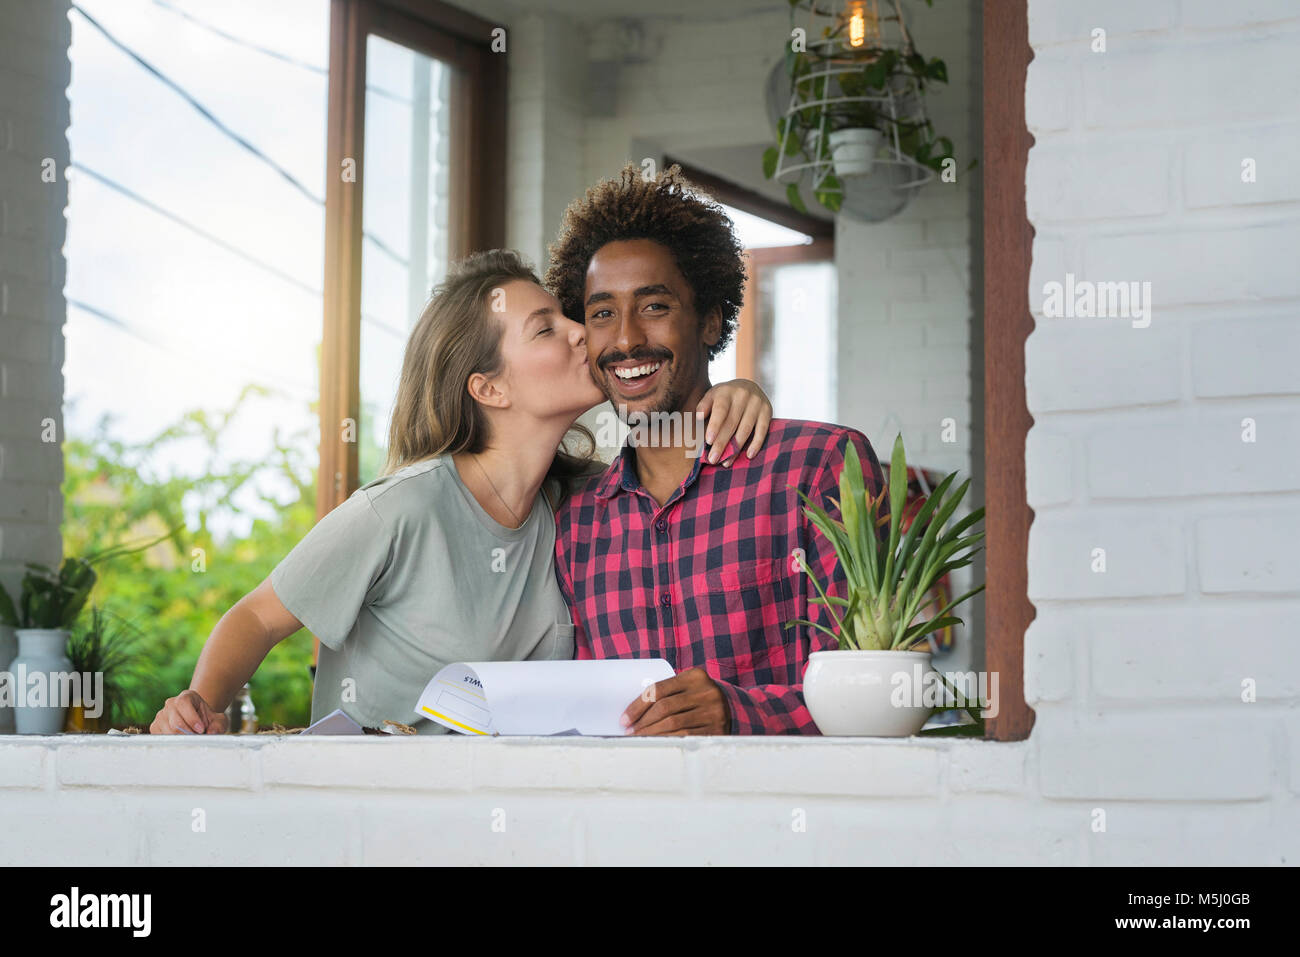 Woman kissing her boyfriend on cheek in cafe Stock Photo